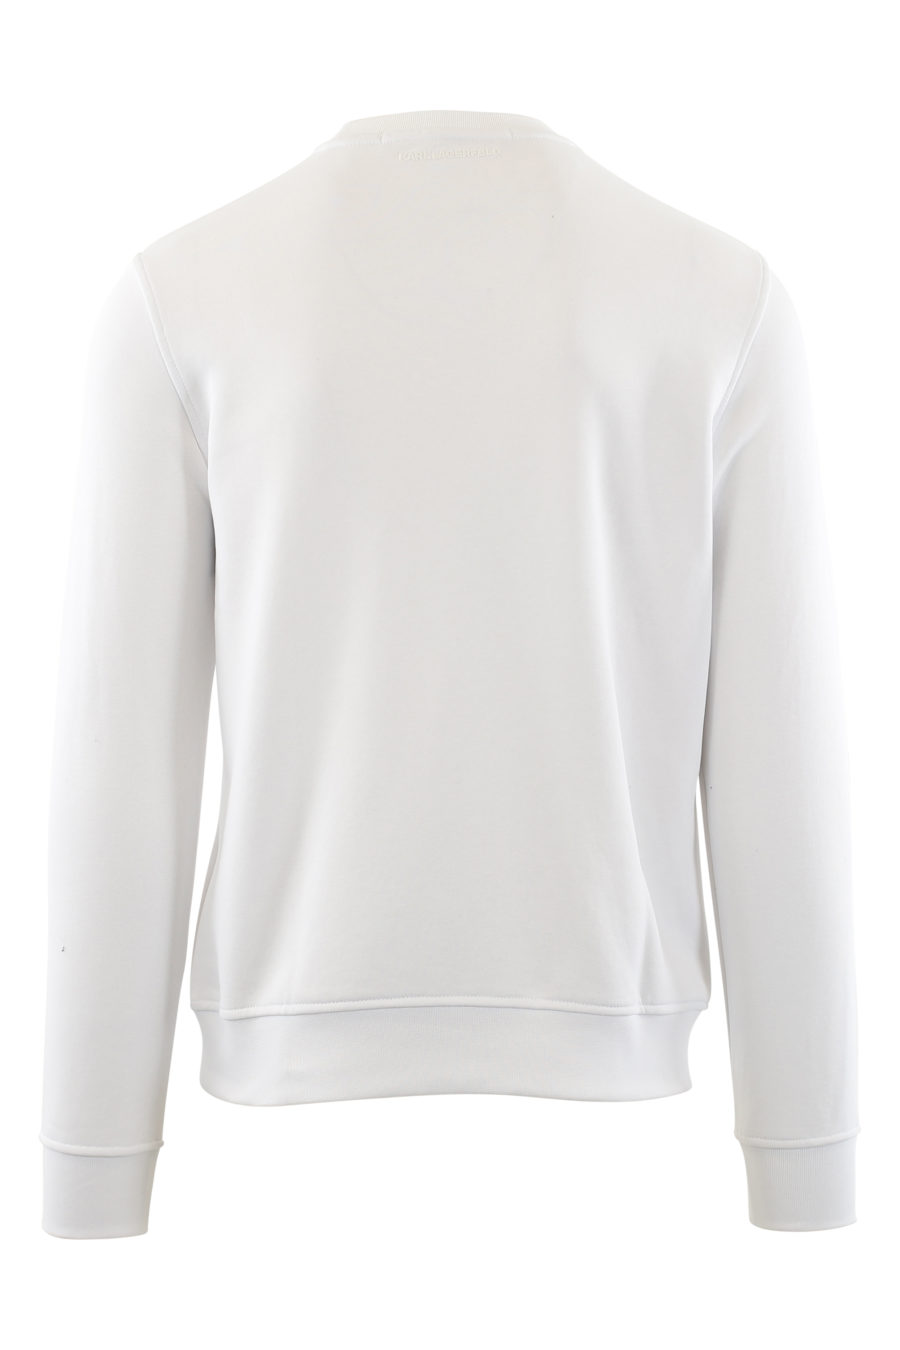 White sweatshirt with white rubber logo - IMG 6535